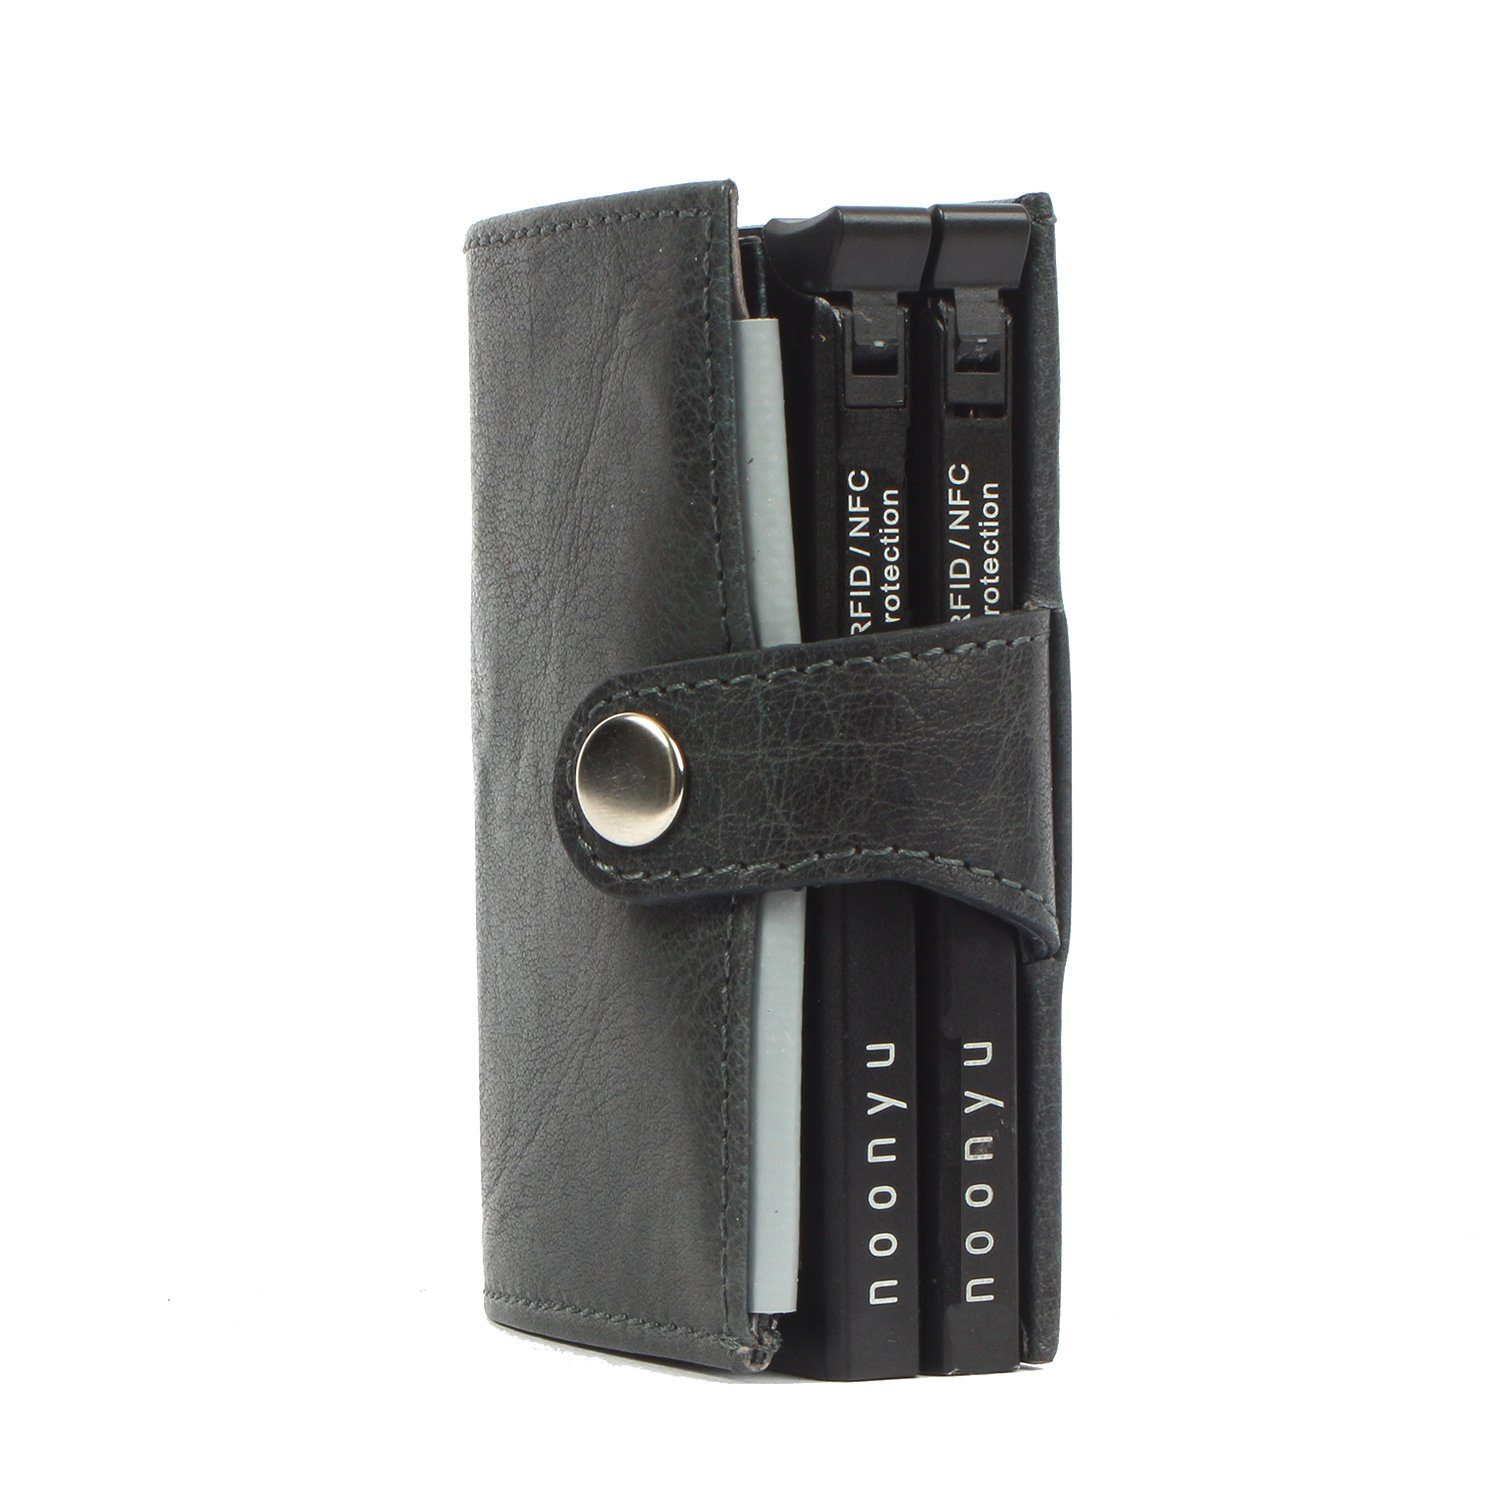 aus Margelisch noonyu steelblue double Leder Mini Kreditkartenbörse leather, Geldbörse RFID Upcycling